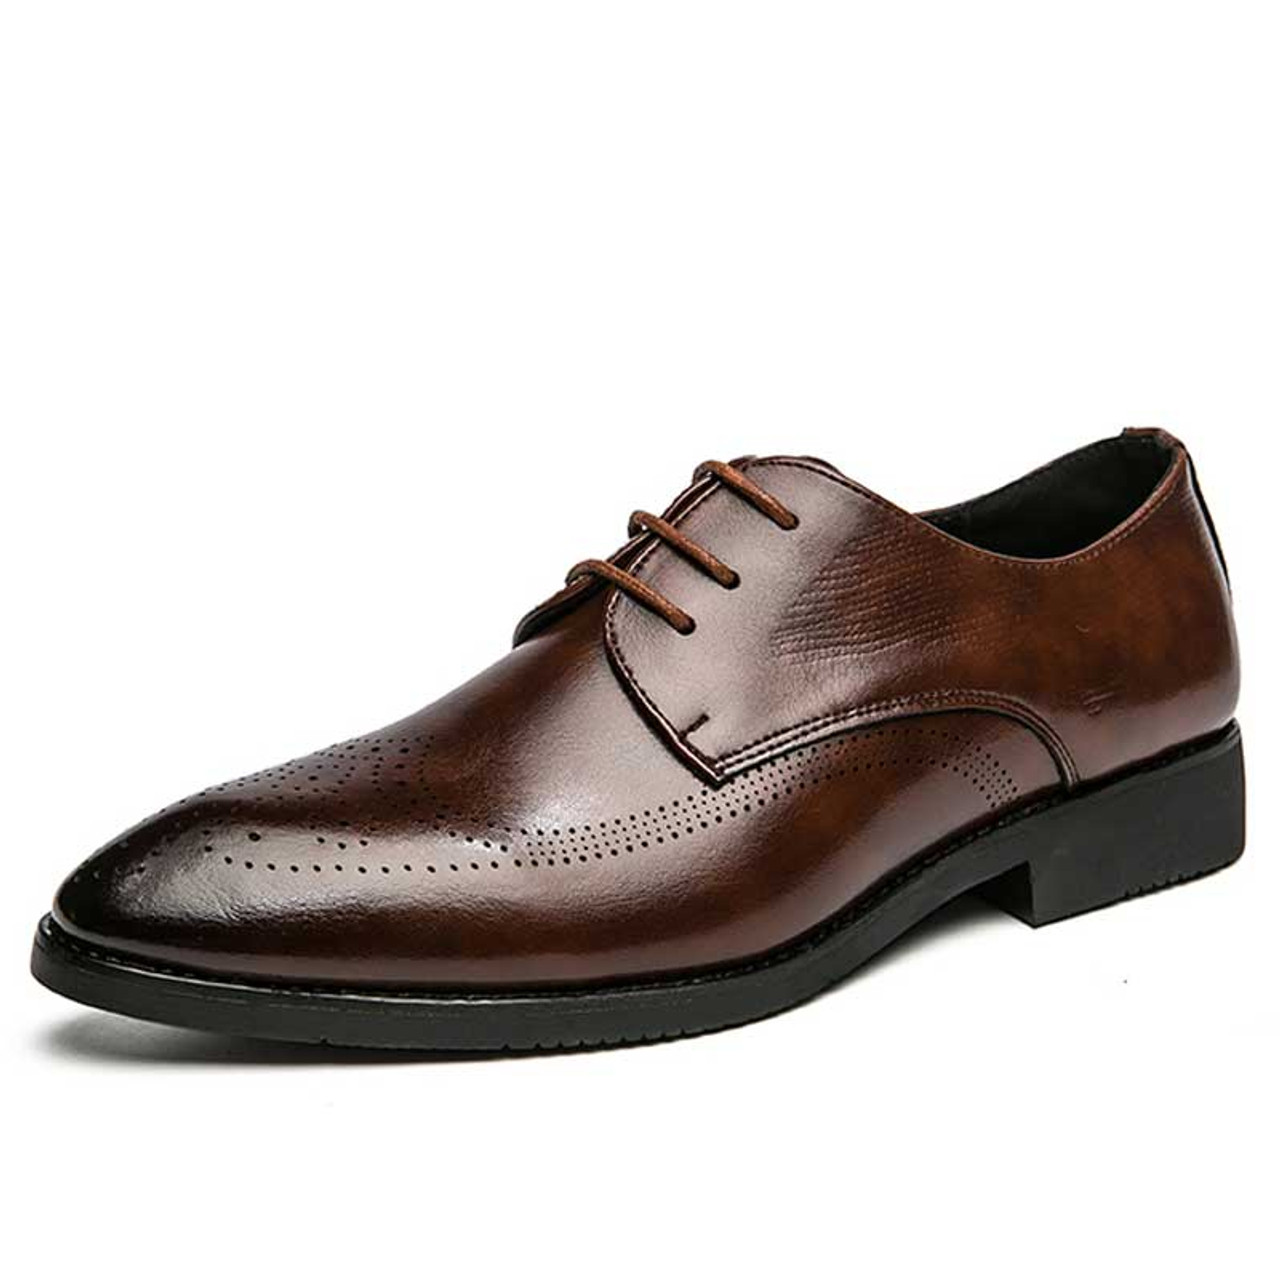 Brown retro brogue point toe derby dress shoe | Mens dress shoes online ...